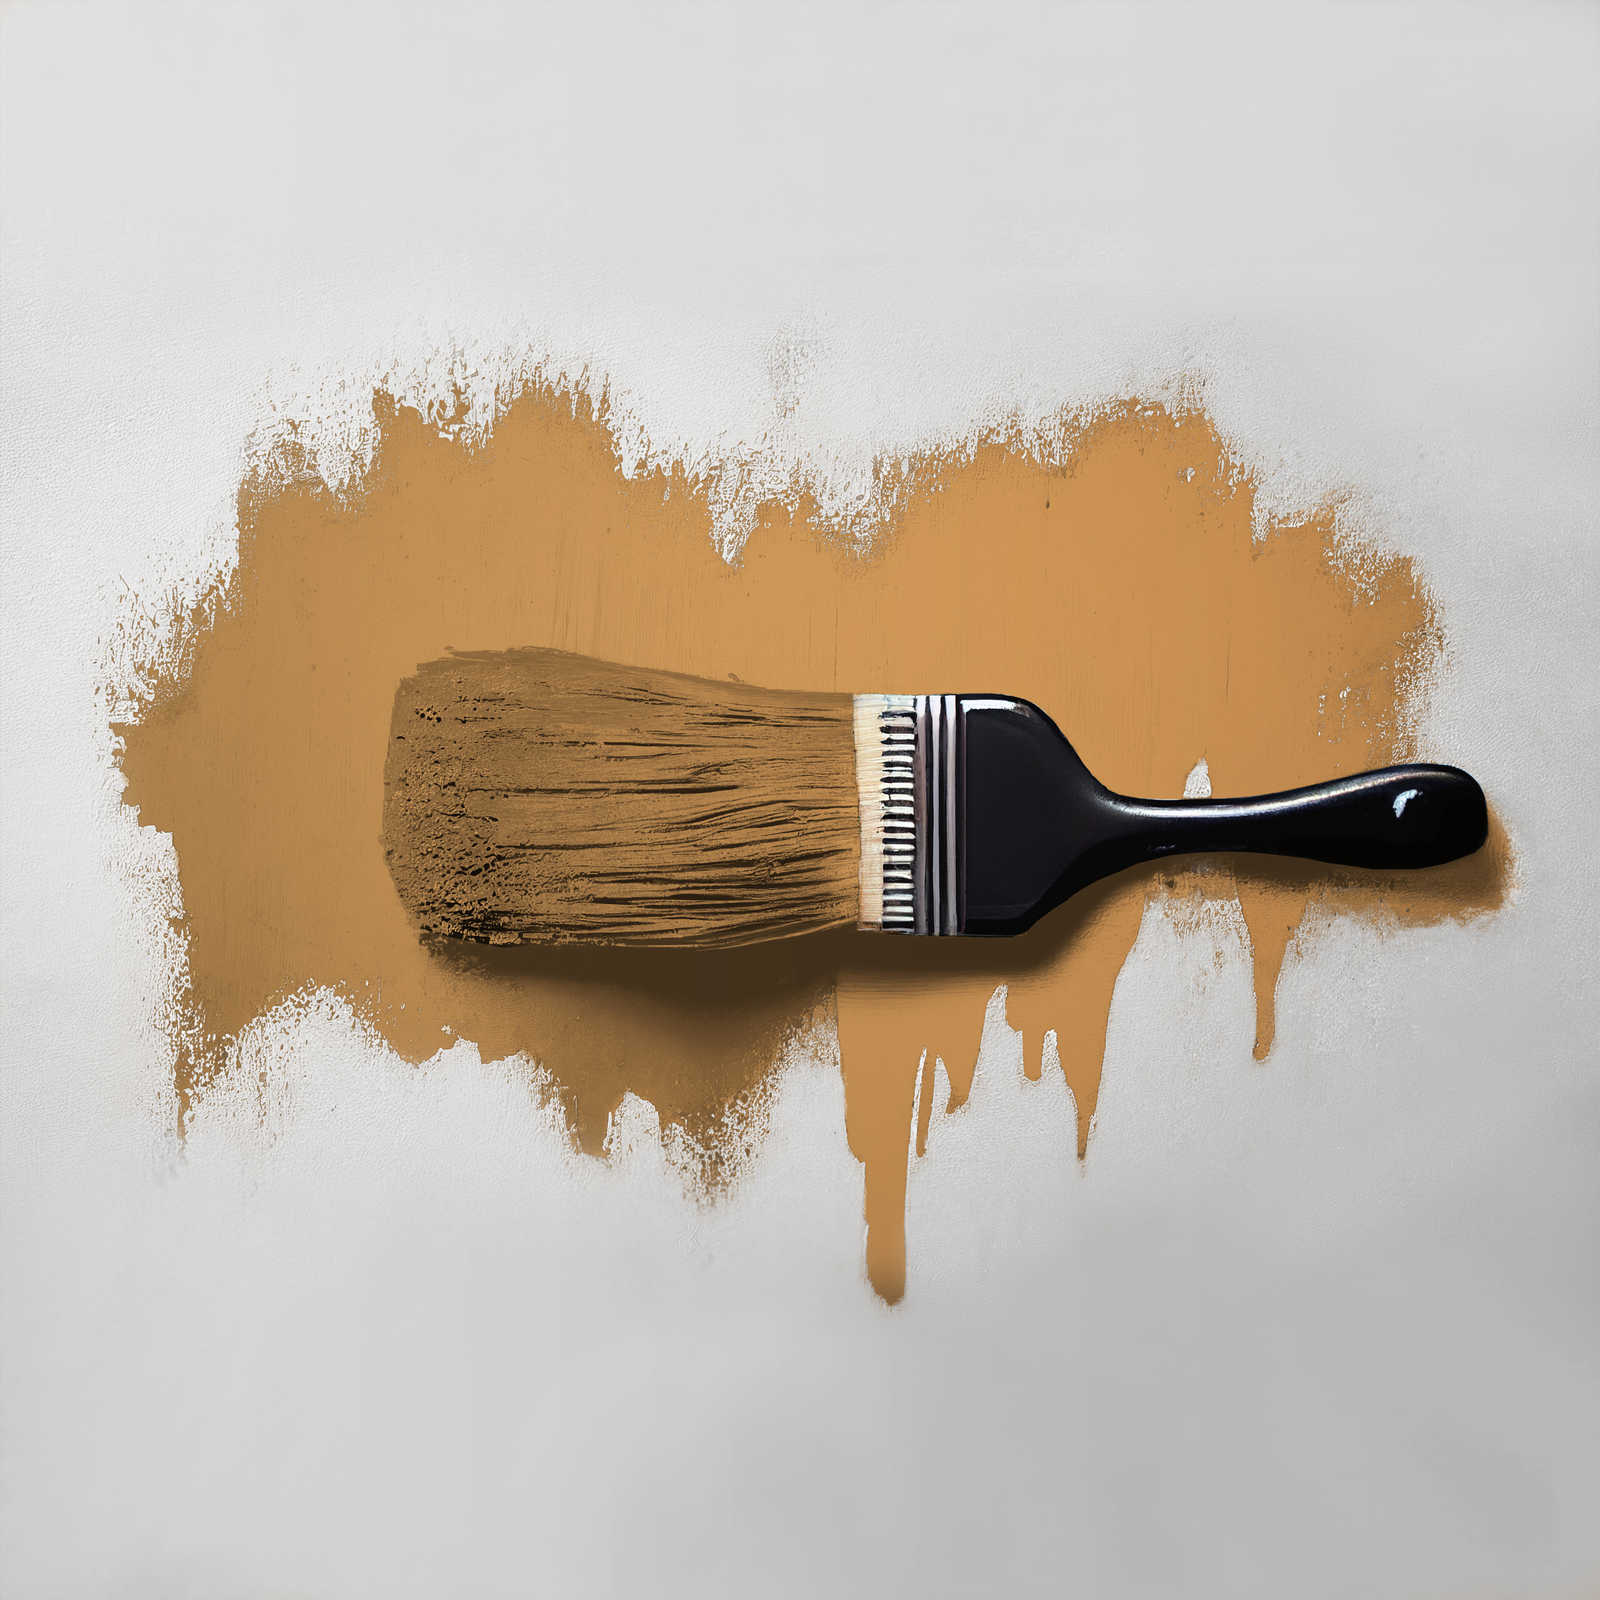             Peinture murale TCK5007 »Salted Caramel« en caramel intense – 5,0 litres
        